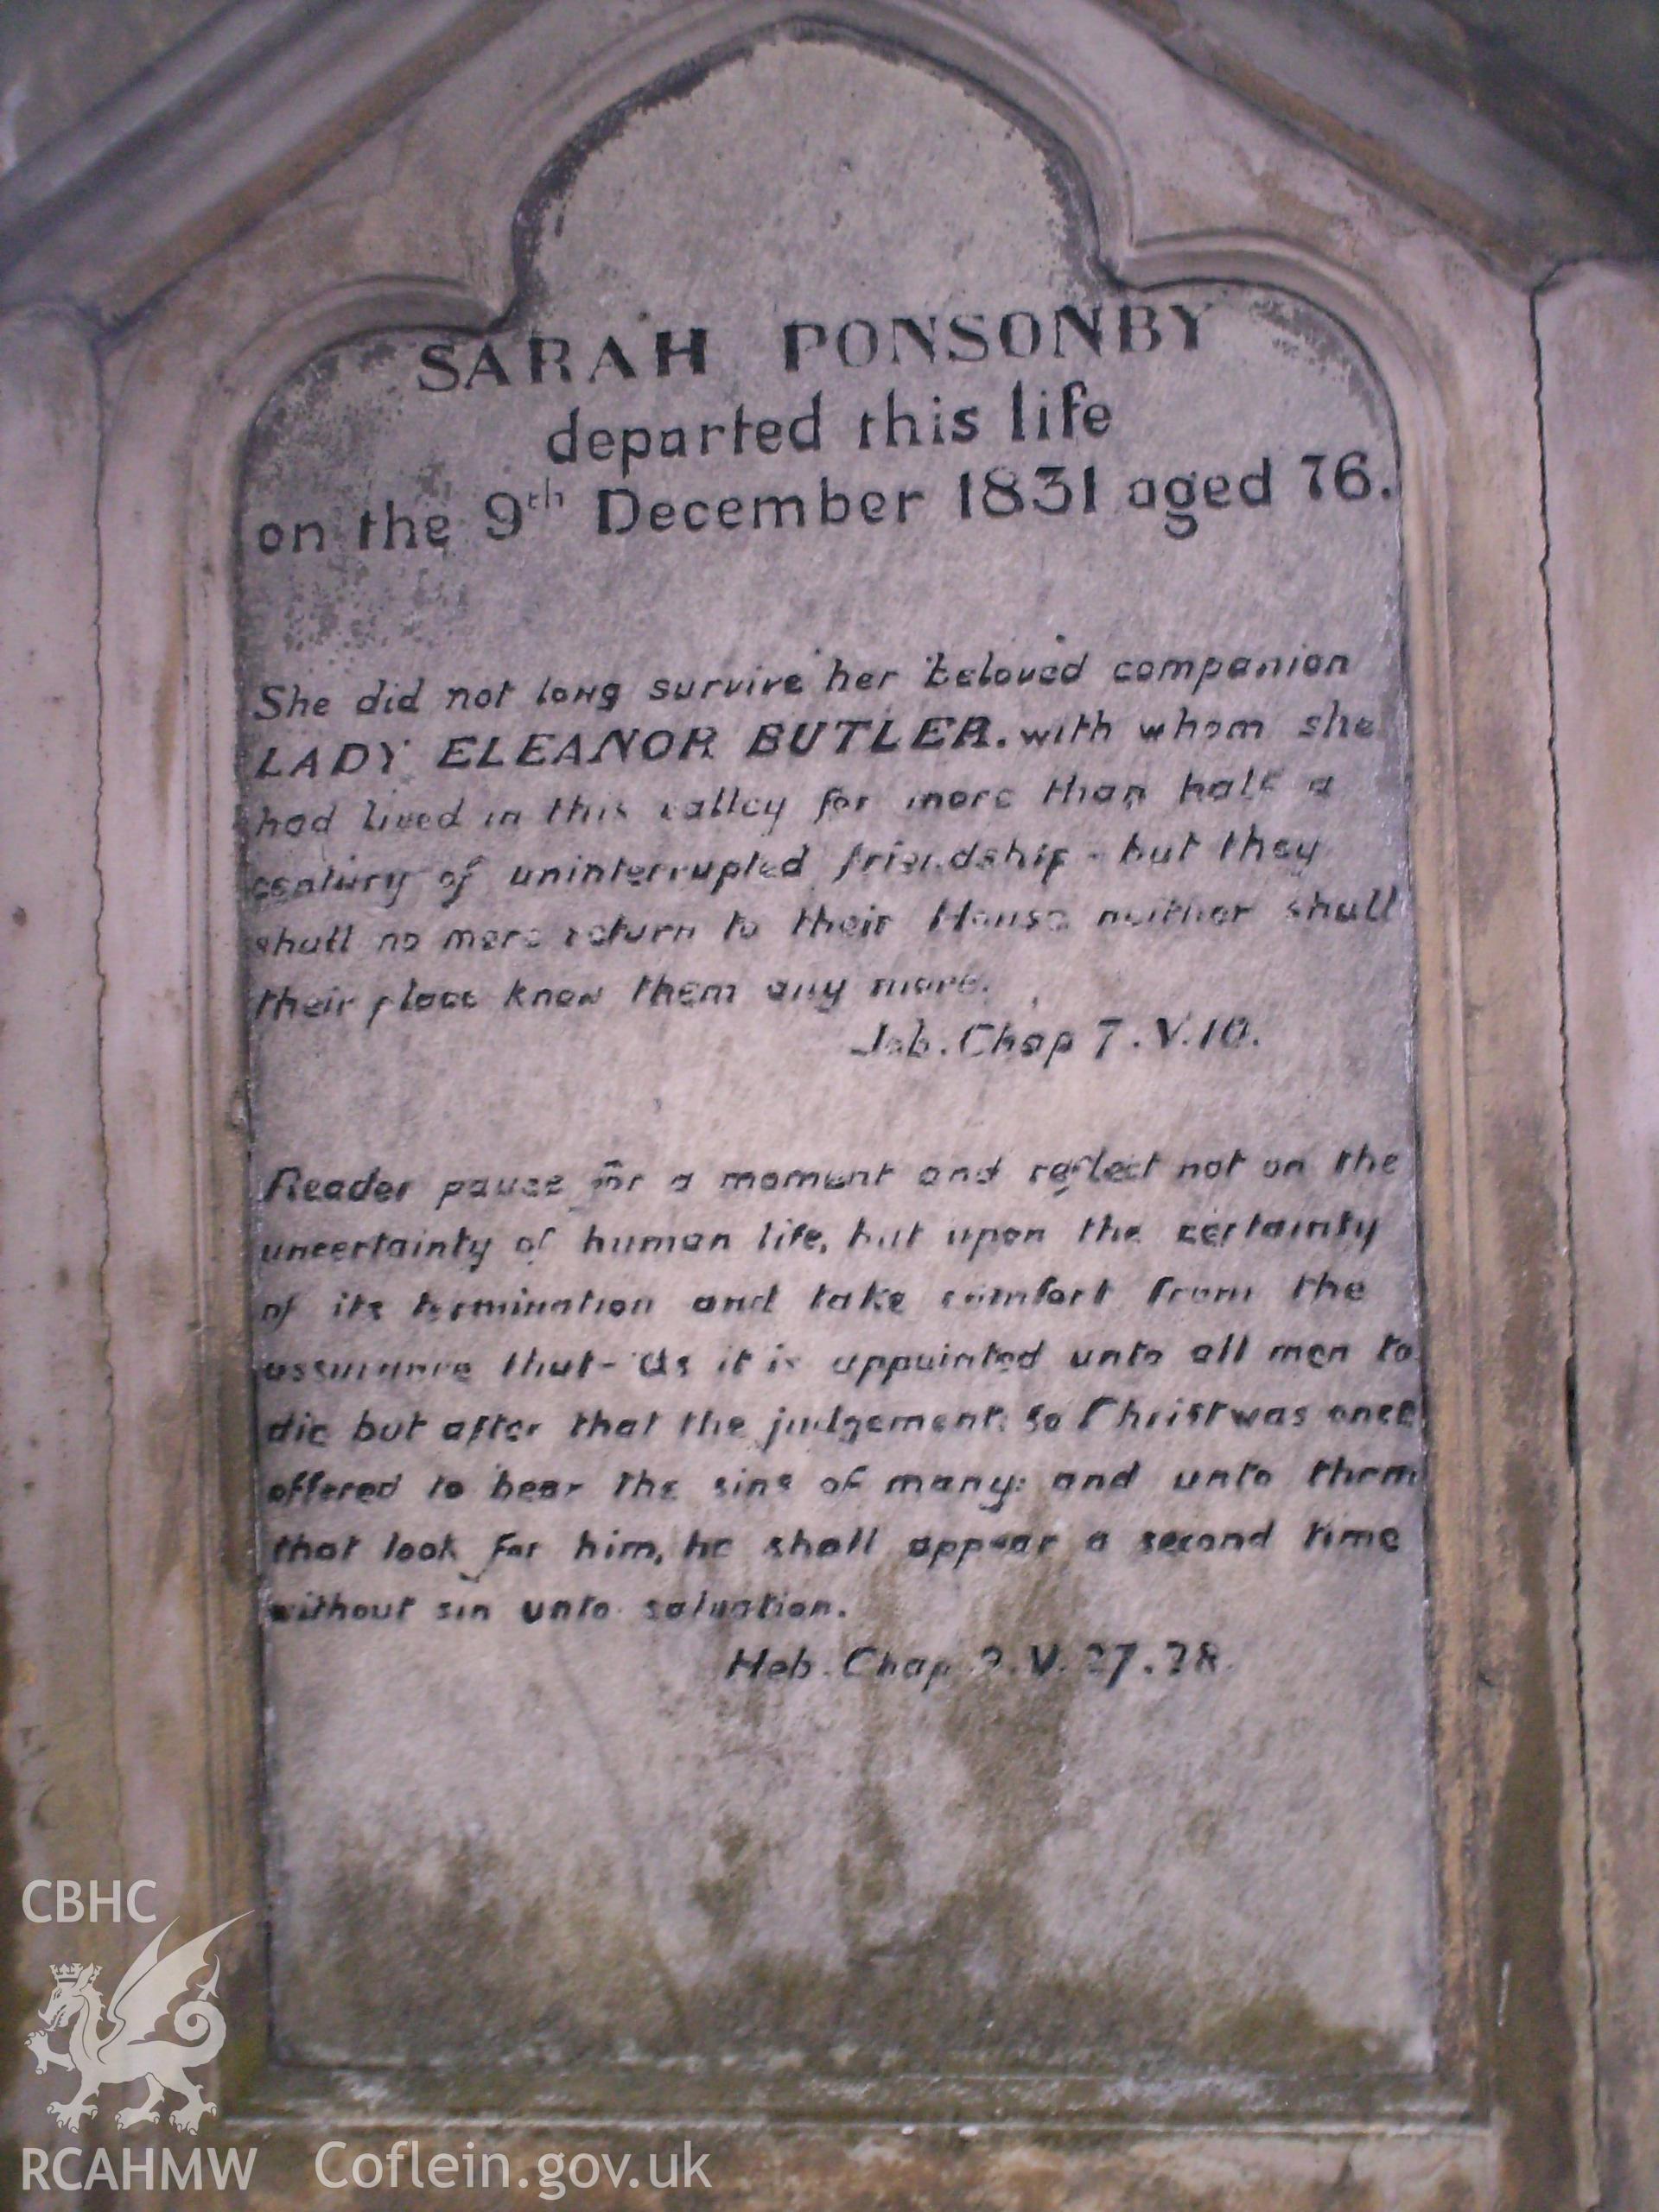 Digital image showing the original memorial plaque to Sarah Ponsonby (now in Llangollen Museum).